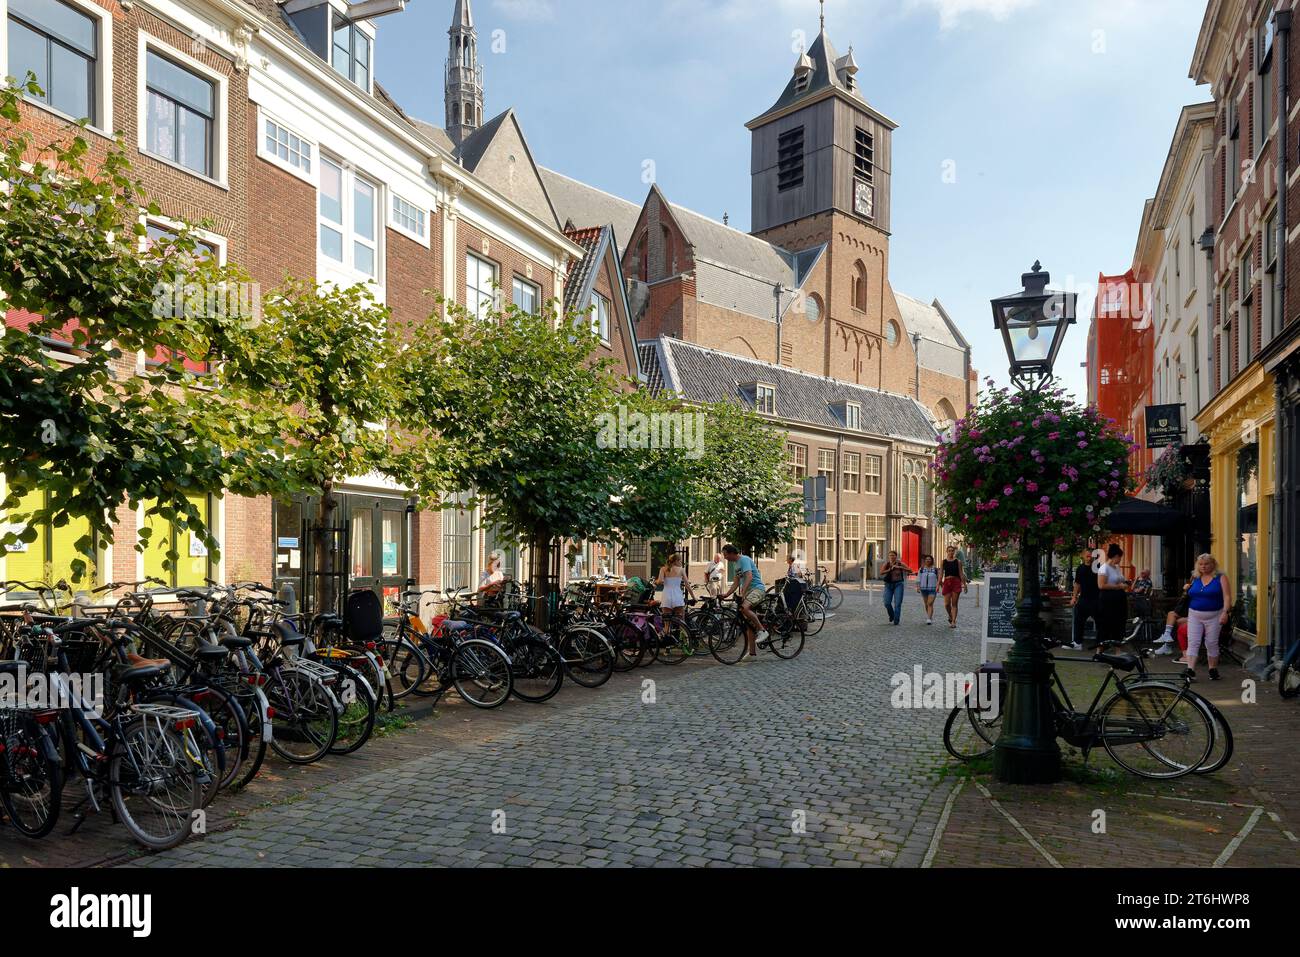 Hooglandse Kerk nel centro storico di Leida/Leida, Paesi Bassi meridionali, Paesi Bassi-Zuid, Benelux, Benelux, paesi Bassi, Nederland, Foto Stock